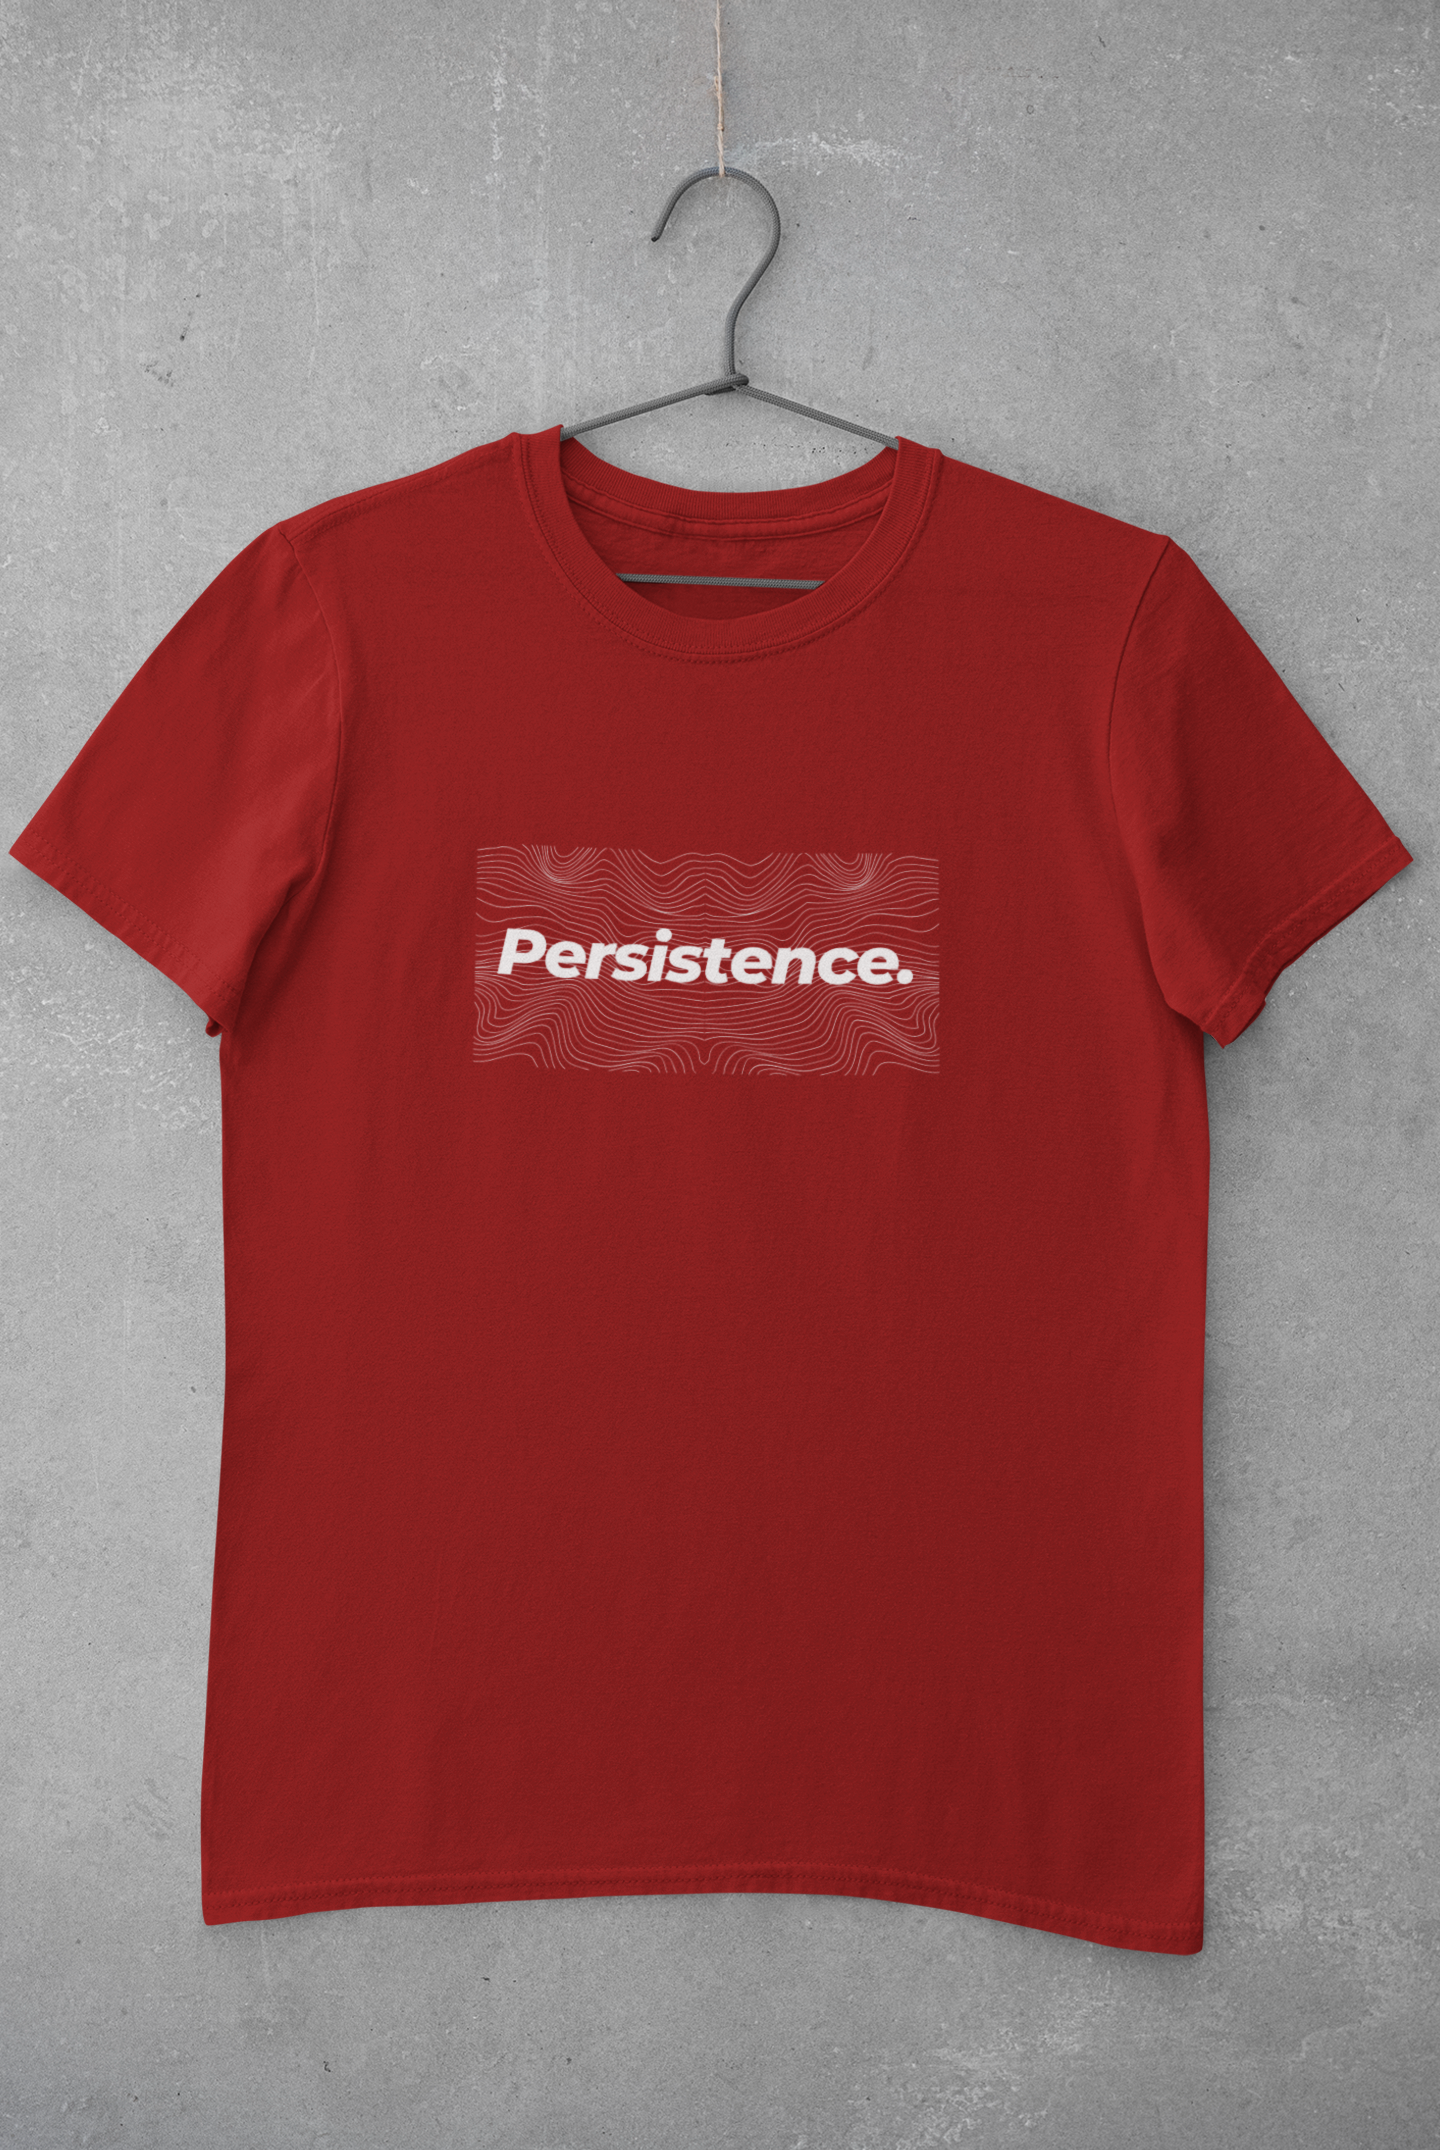 'Persistence' T-Shirt